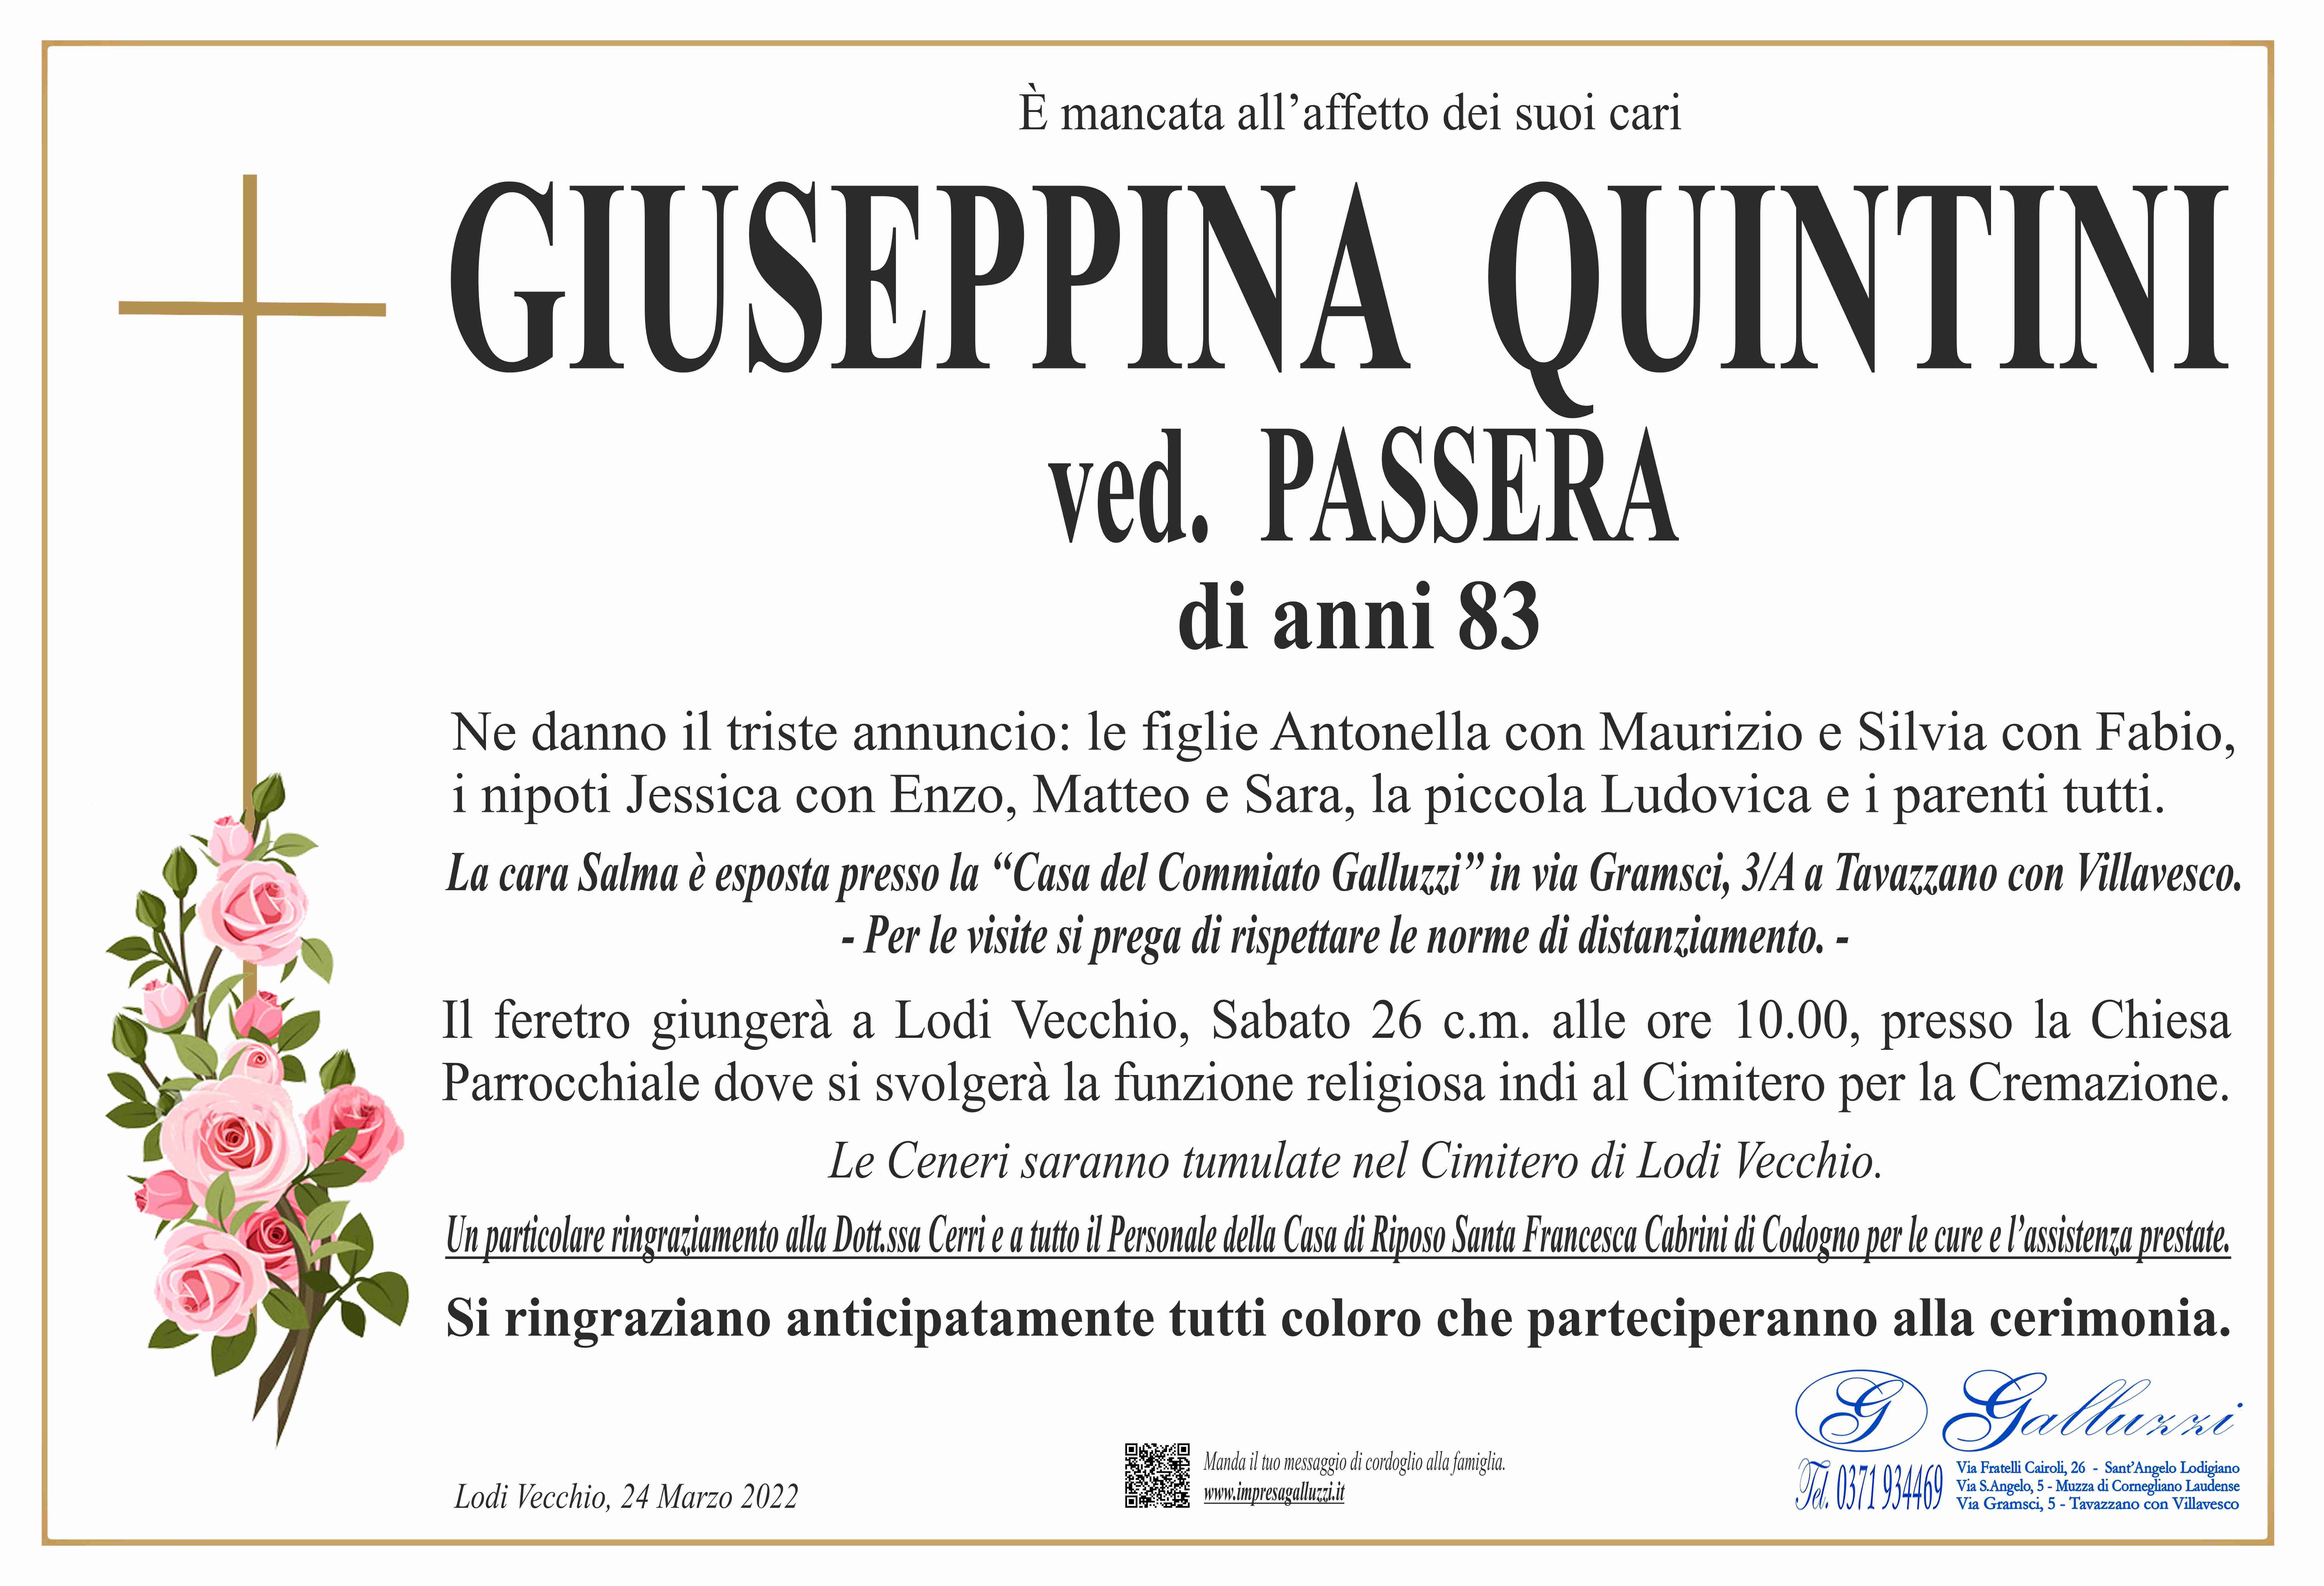 Giuseppina Quintini